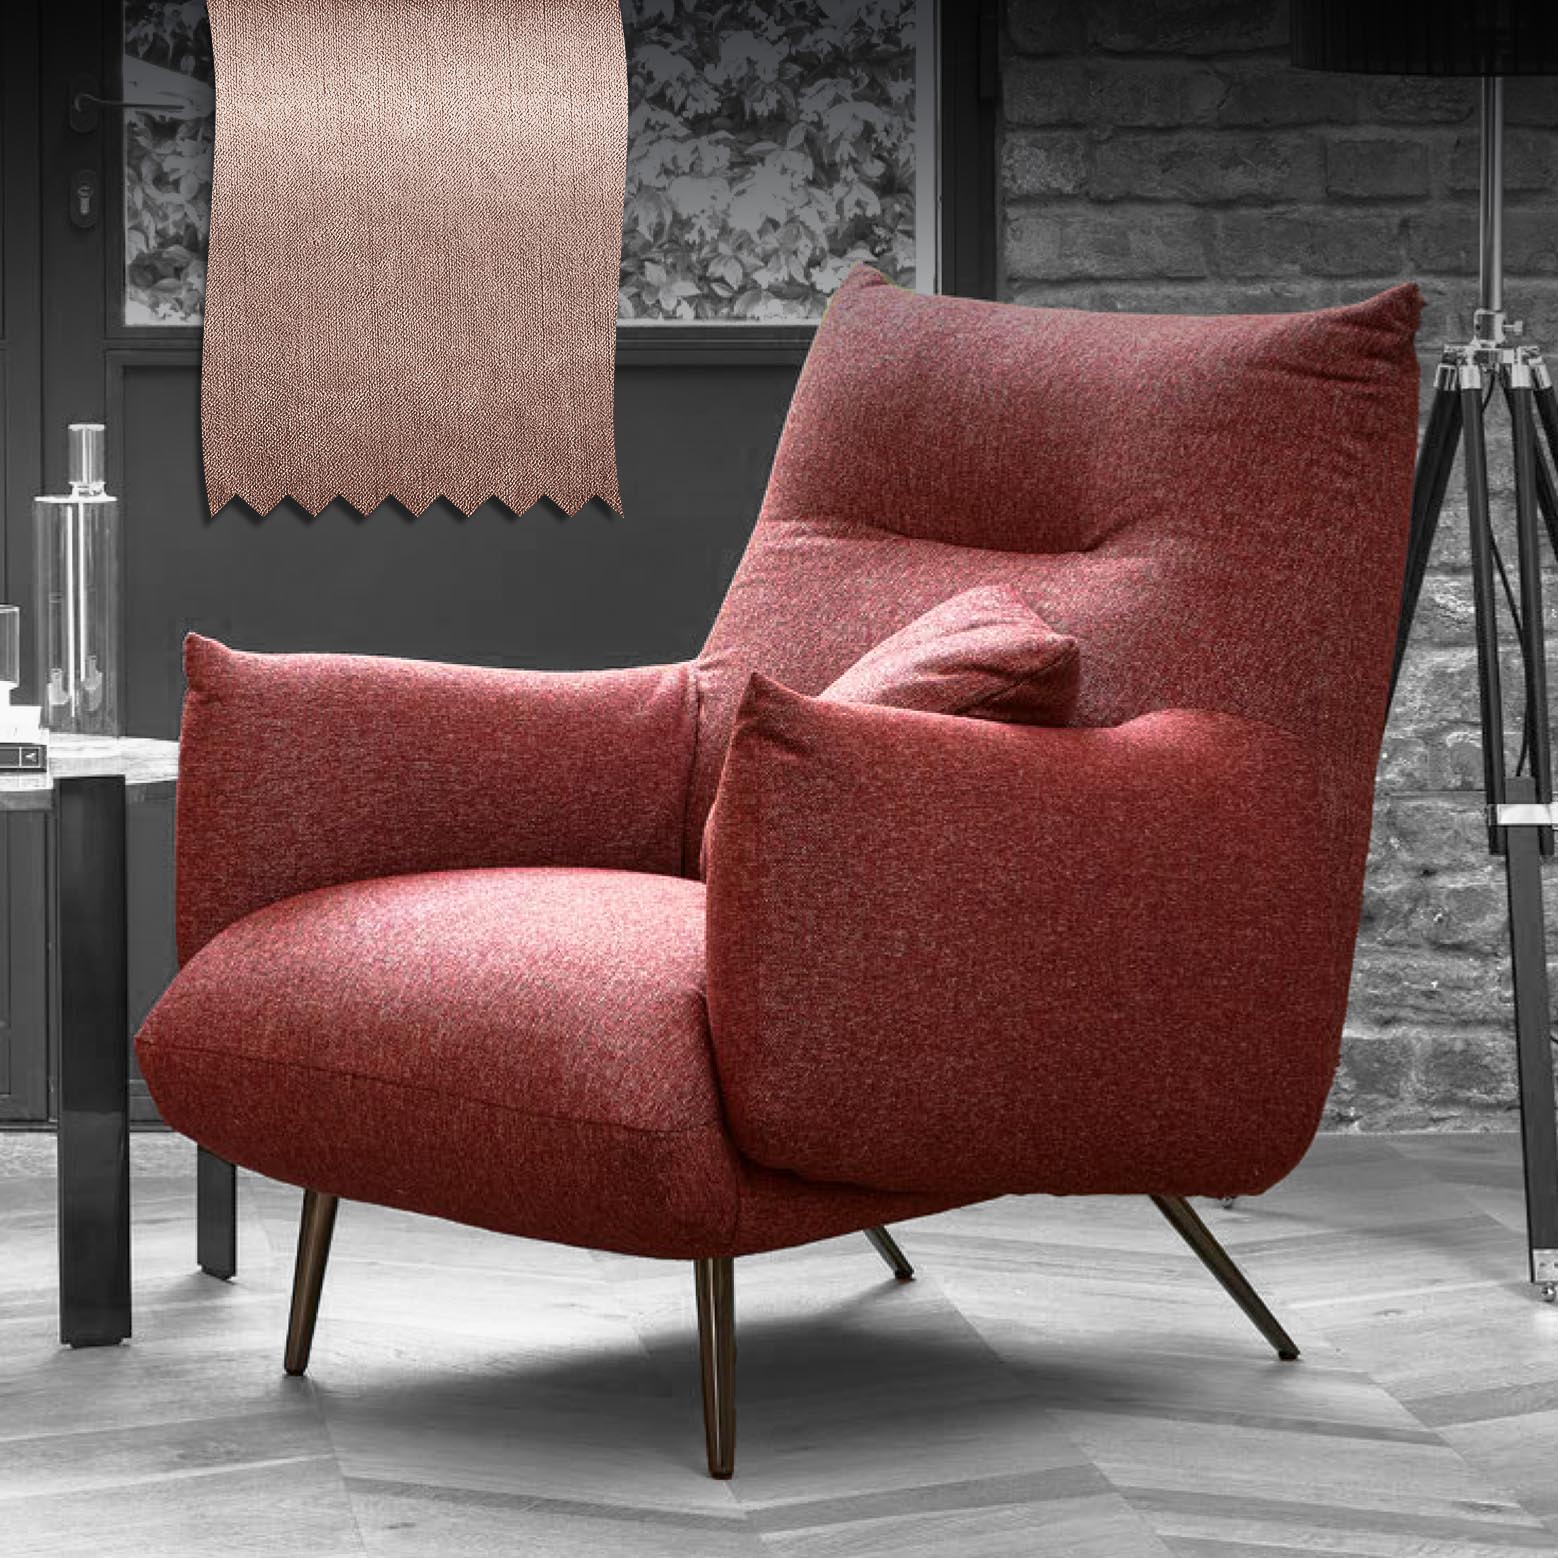 Кресло ROS SRL Rodi ткань Brera 006 79х95х92 см, цвет розовый